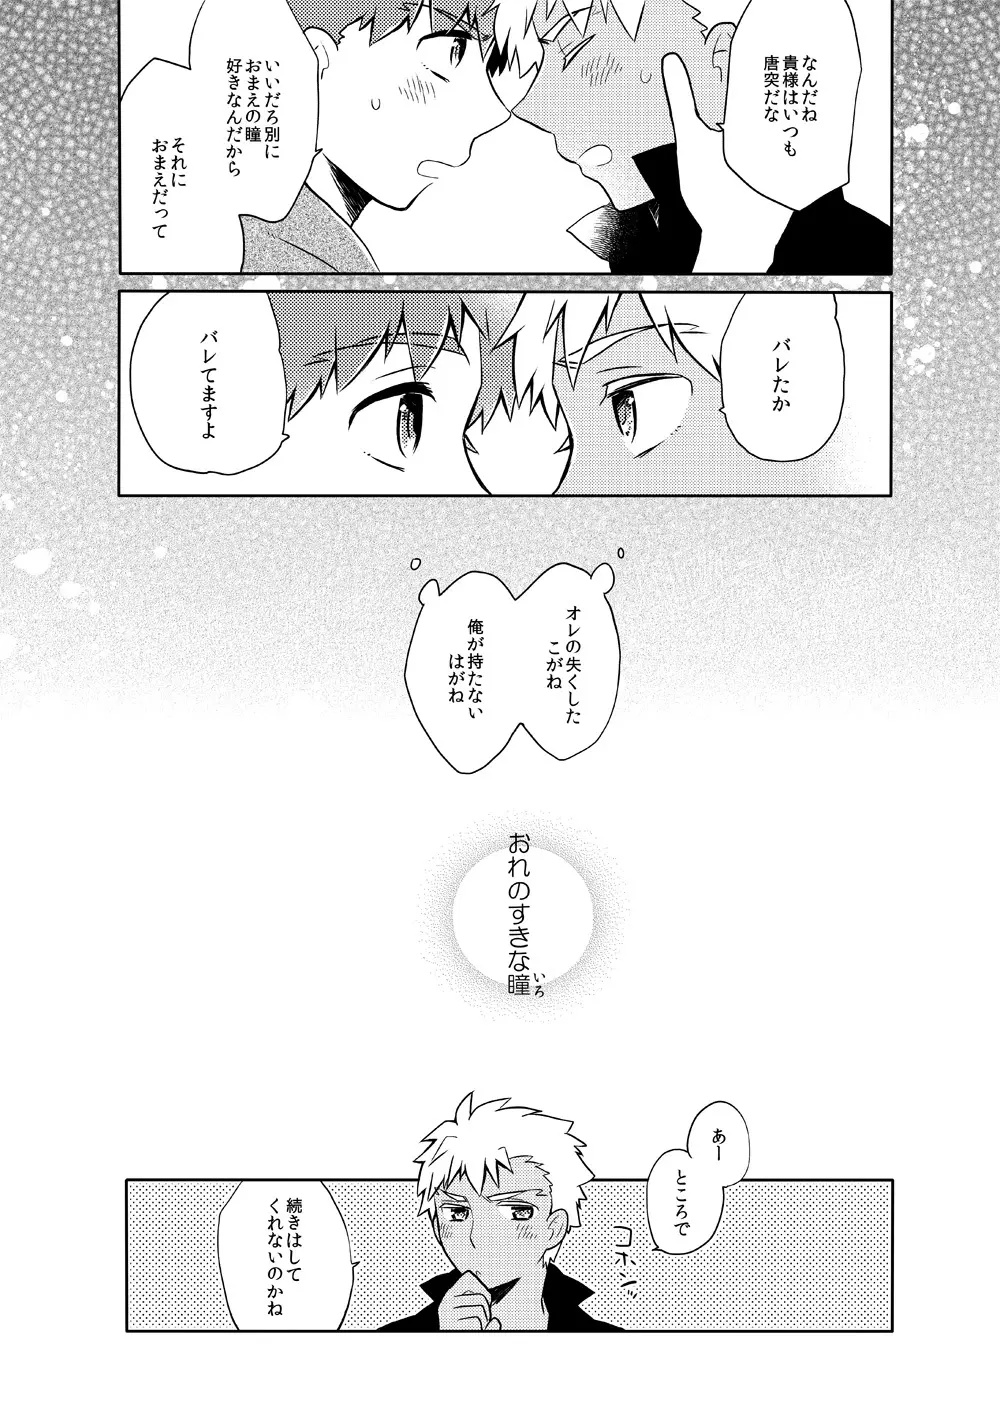 弓士本 - page54